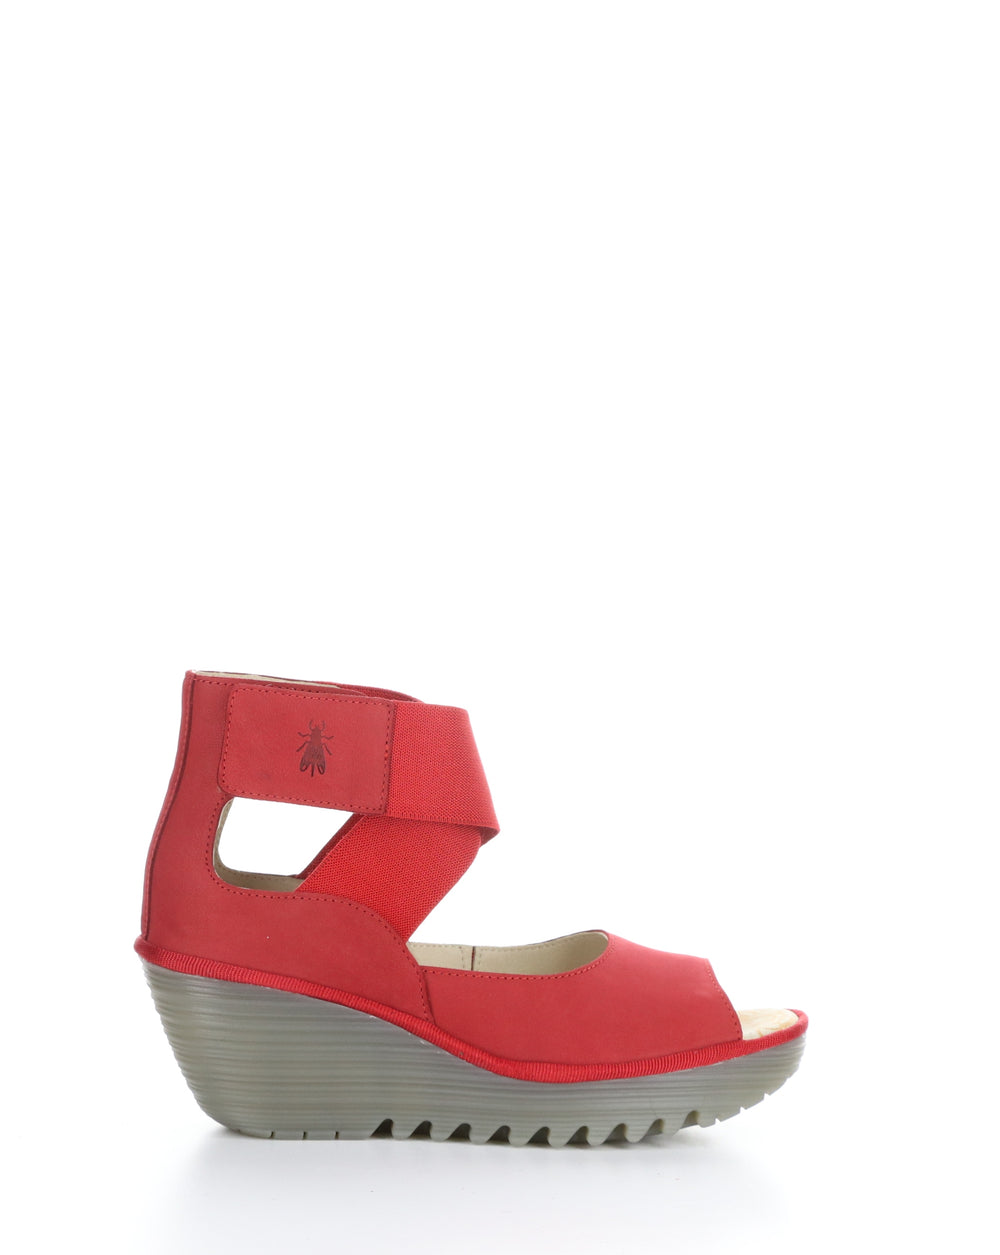 YEFI473FLY Red Velcro Sandals